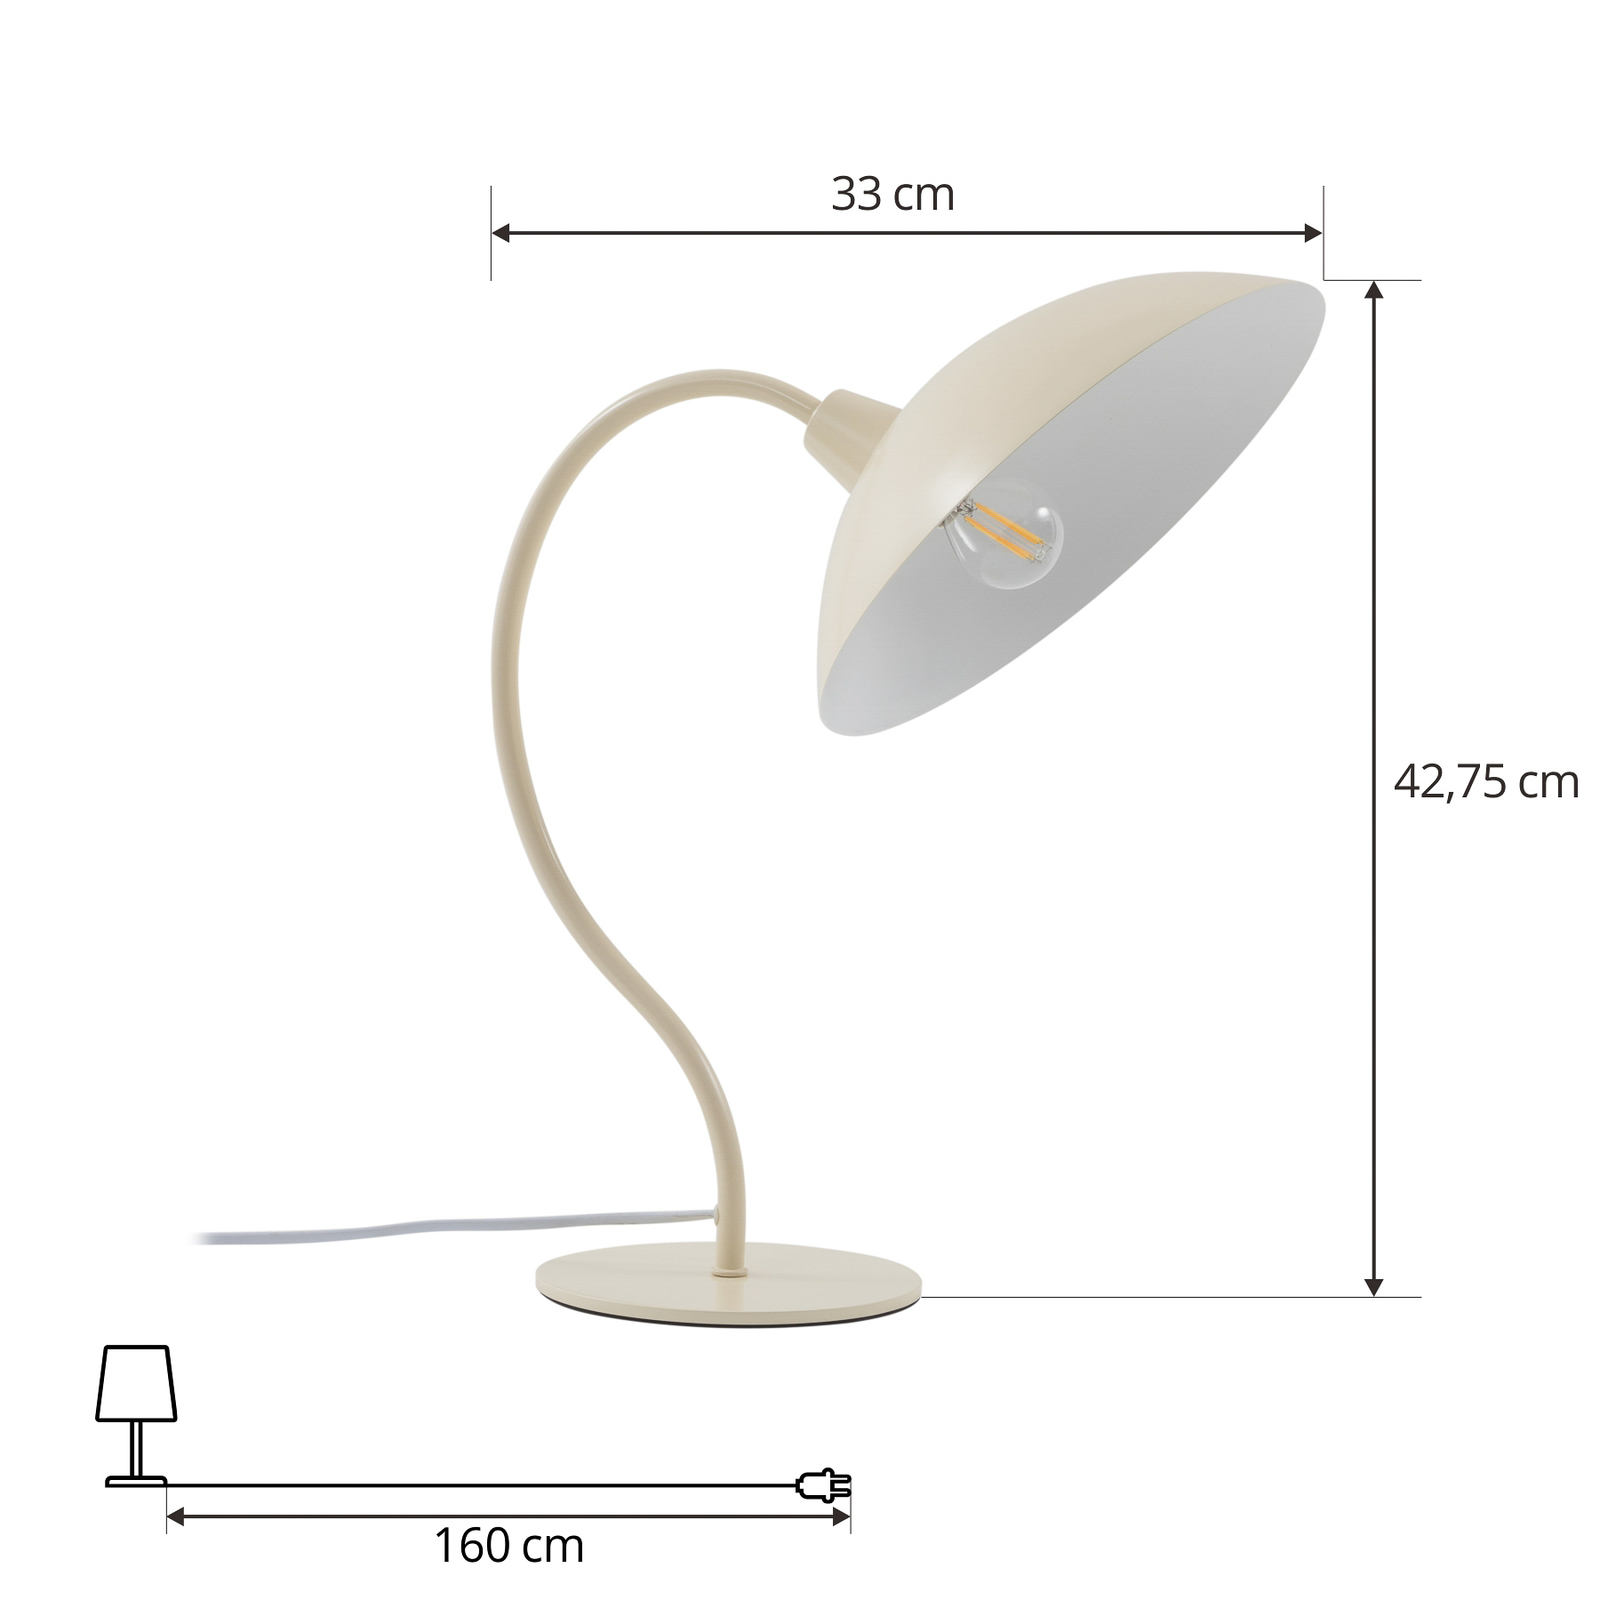 Lucande bordlampe Arvadon, beige, metall, 42,75 cm høy